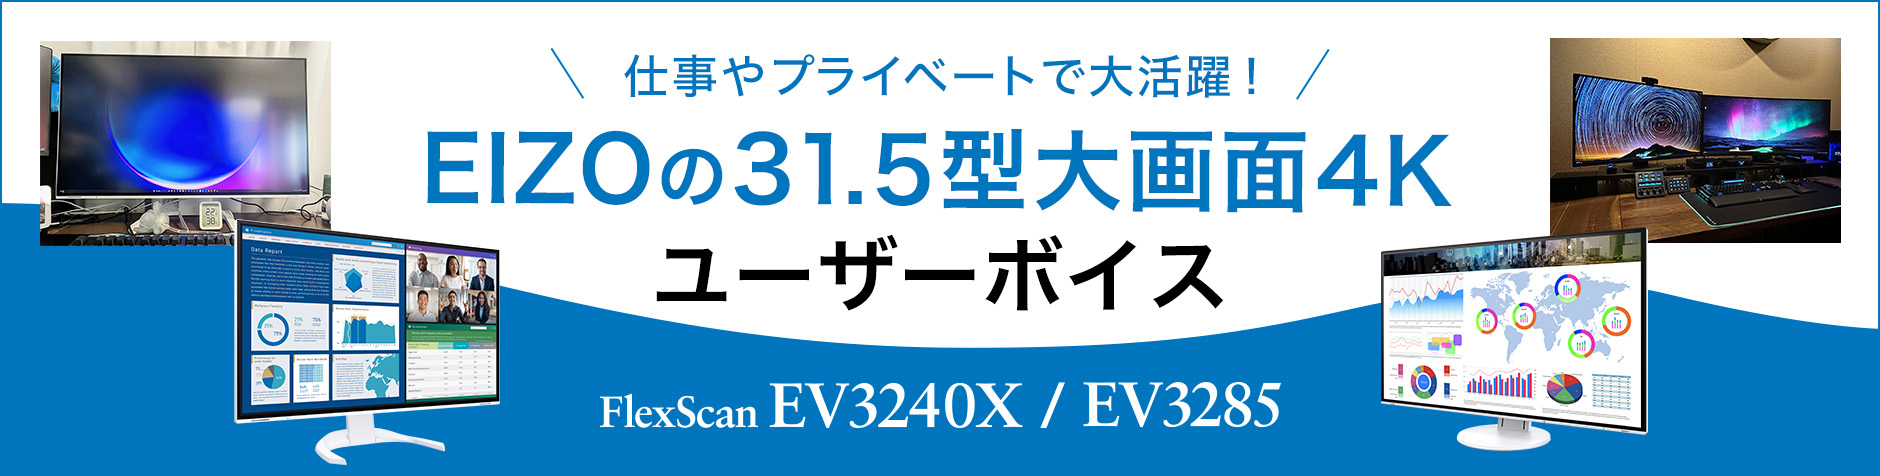 FlexScan EV3240X / EV3285ユーザーボイス